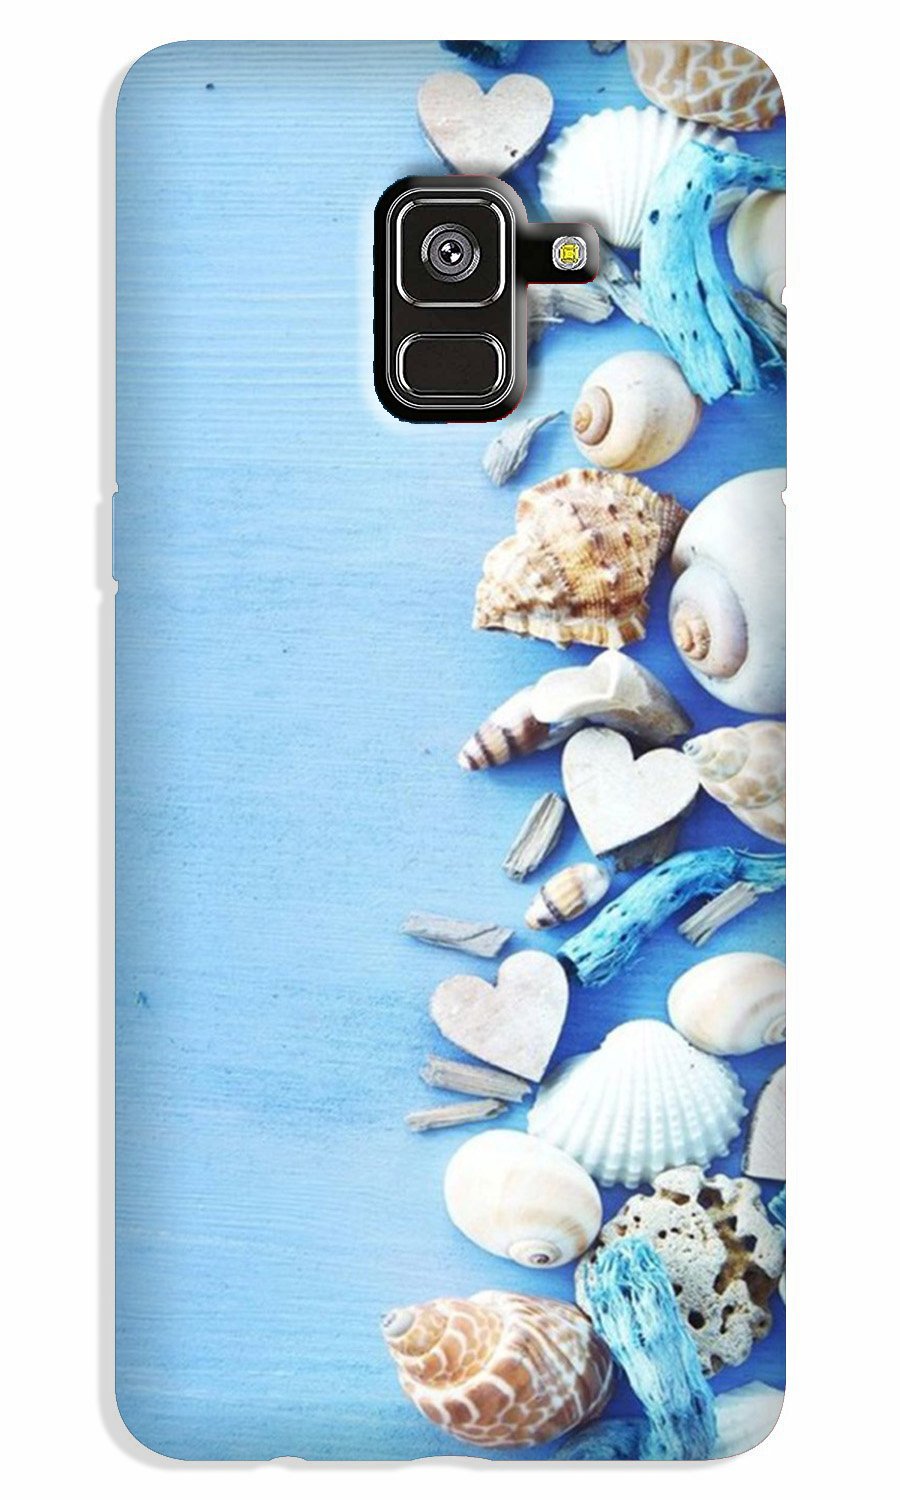 Sea Shells2 Case for Galaxy A8 Plus